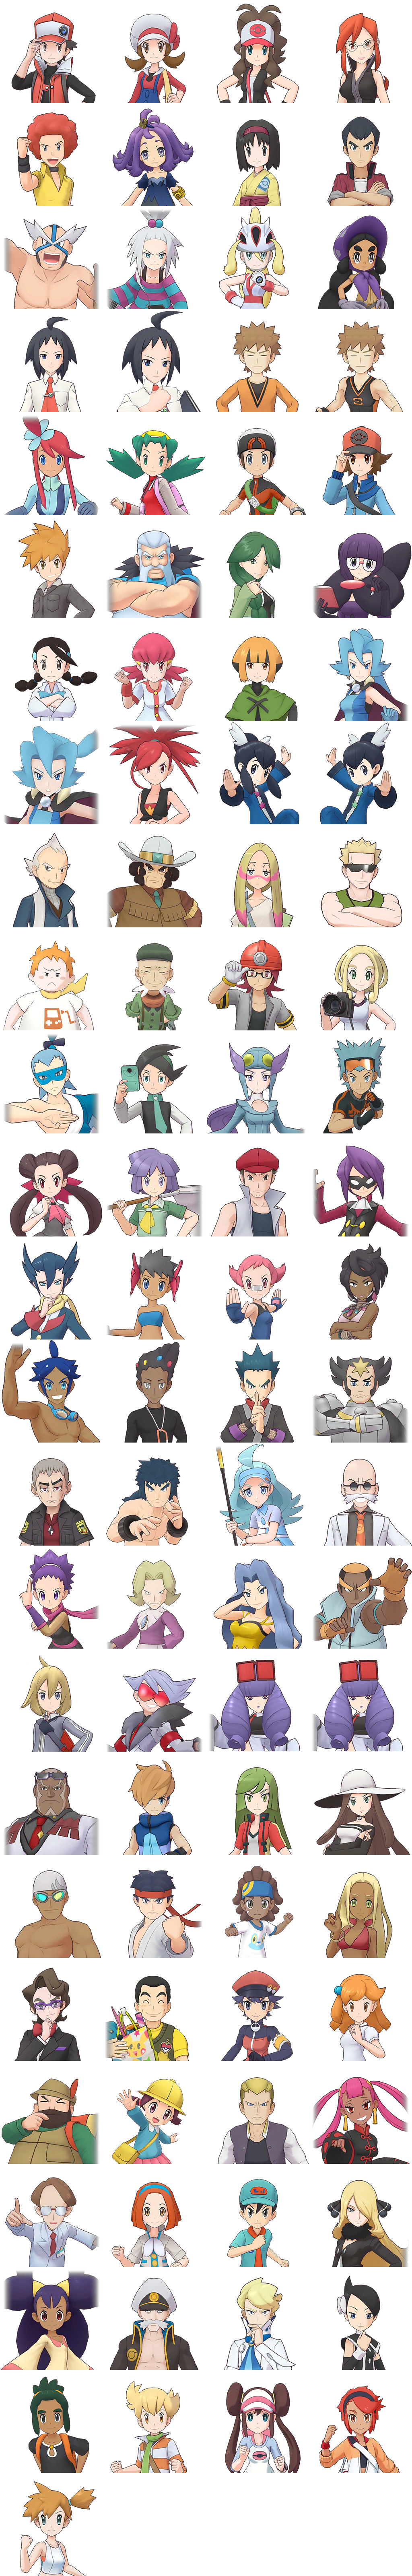 Pokémon Masters - Trainer Icons